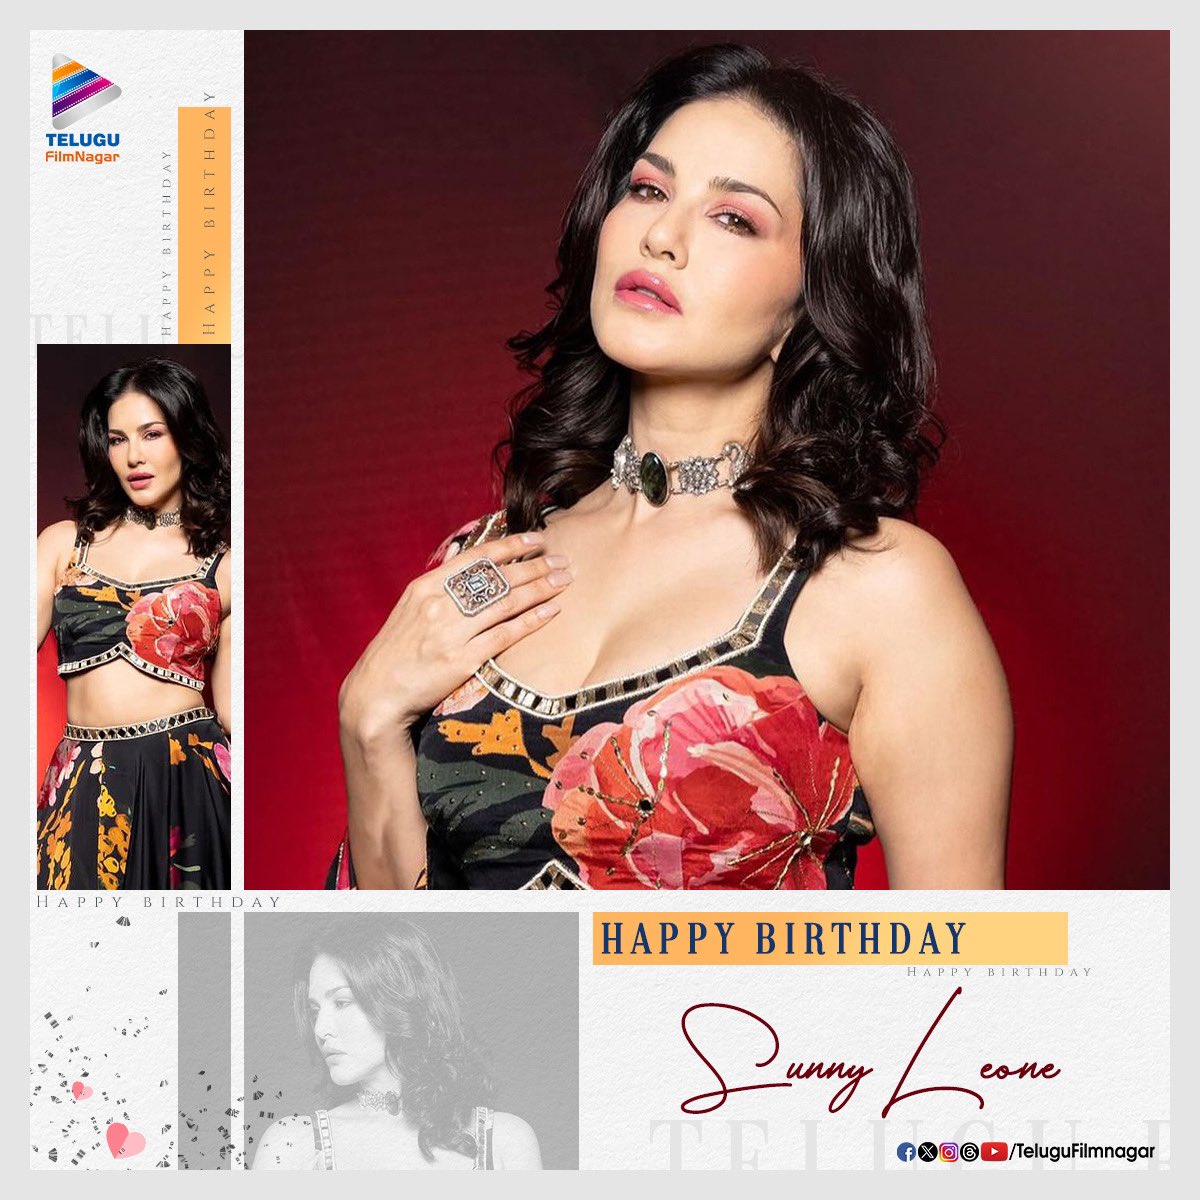 Here's wishing the stunning beauty @SunnyLeone a very Happy Birthday! 🎊🎊 Sending lots of love & happiness your way! ❤️❤️ #HappyBirthdaySunnyLeone #HBDSunnyLeone #TFNWishes #TeluguFilmNagar